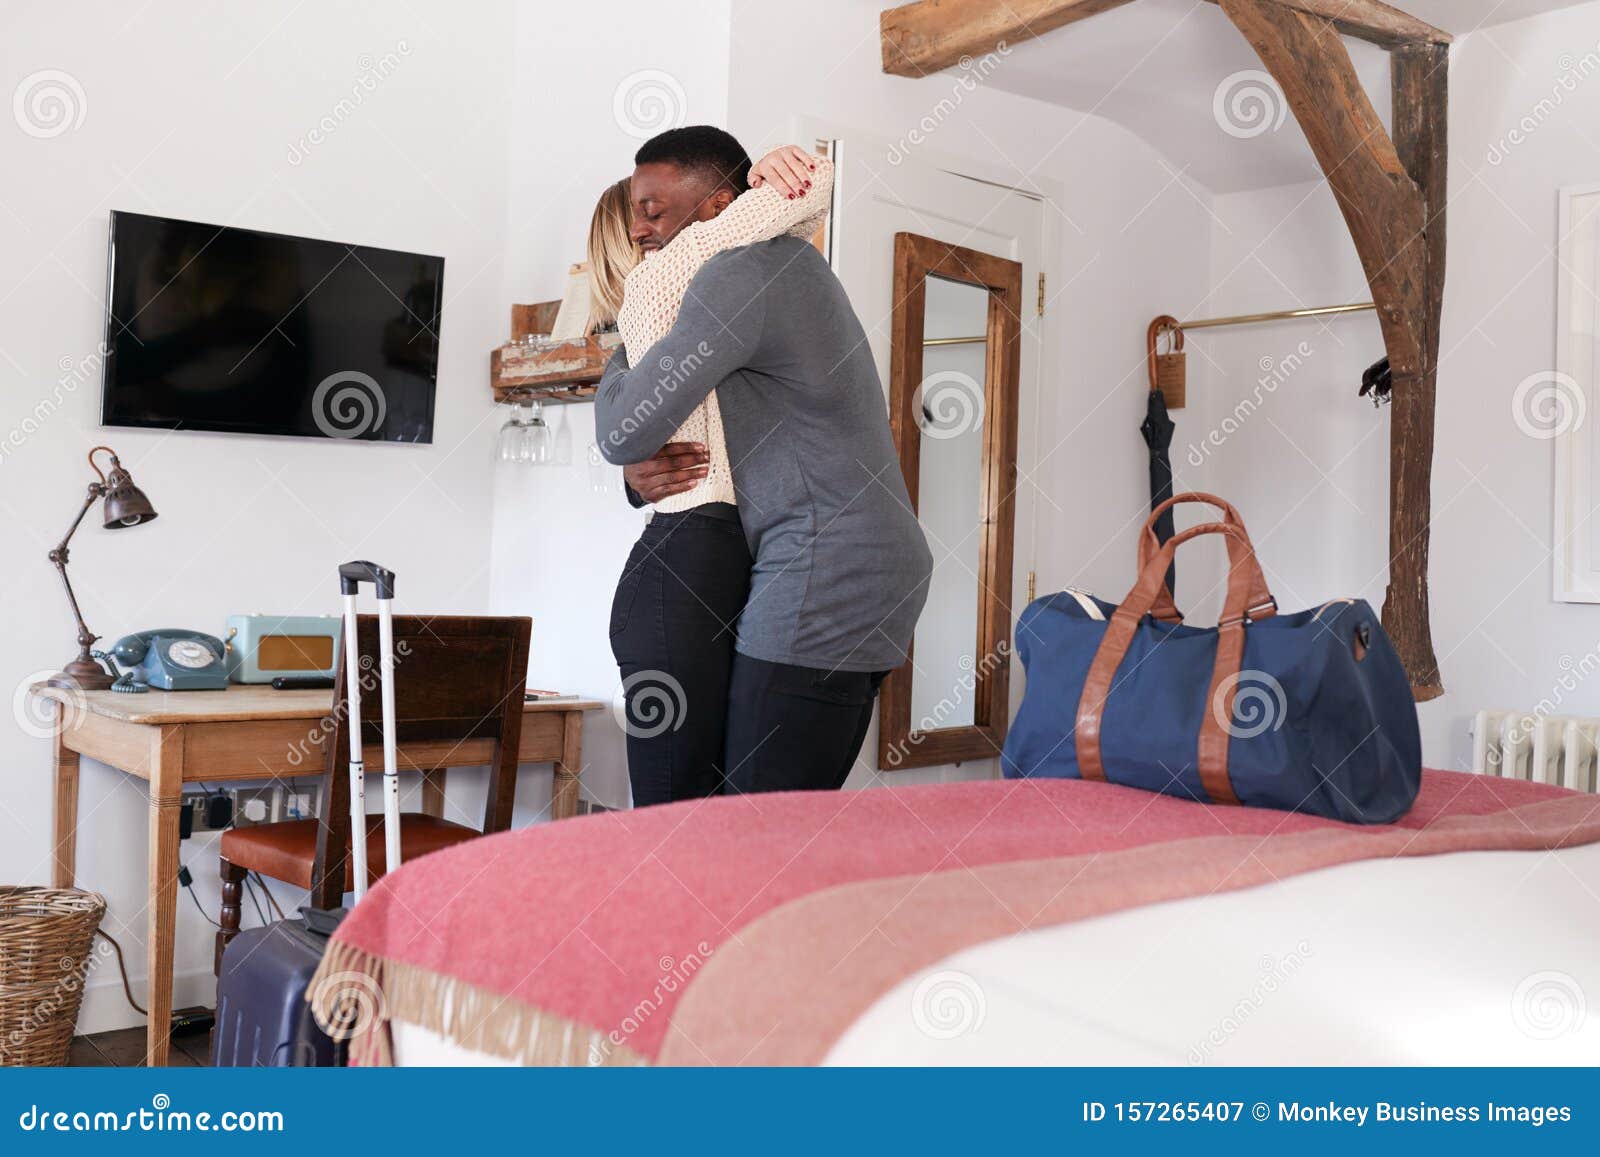 Couple Spending Romantic Weekend Away Hugging In Hotel Room Stock Image